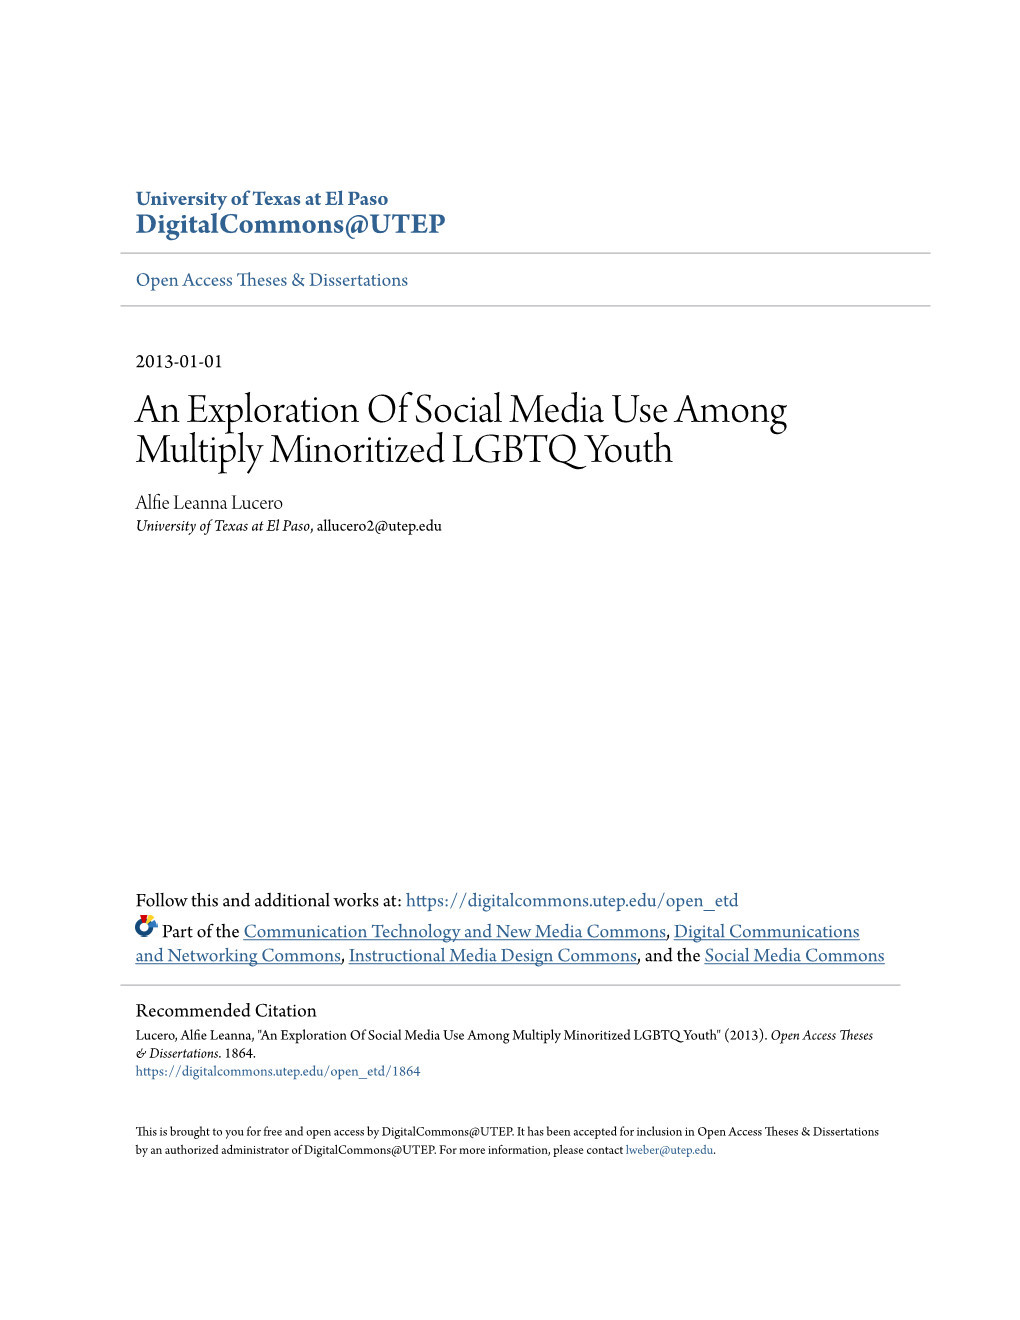 An Exploration of Social Media Use Among Multiply Minoritized LGBTQ Youth Alfie Leanna Lucero University of Texas at El Paso, Allucero2@Utep.Edu